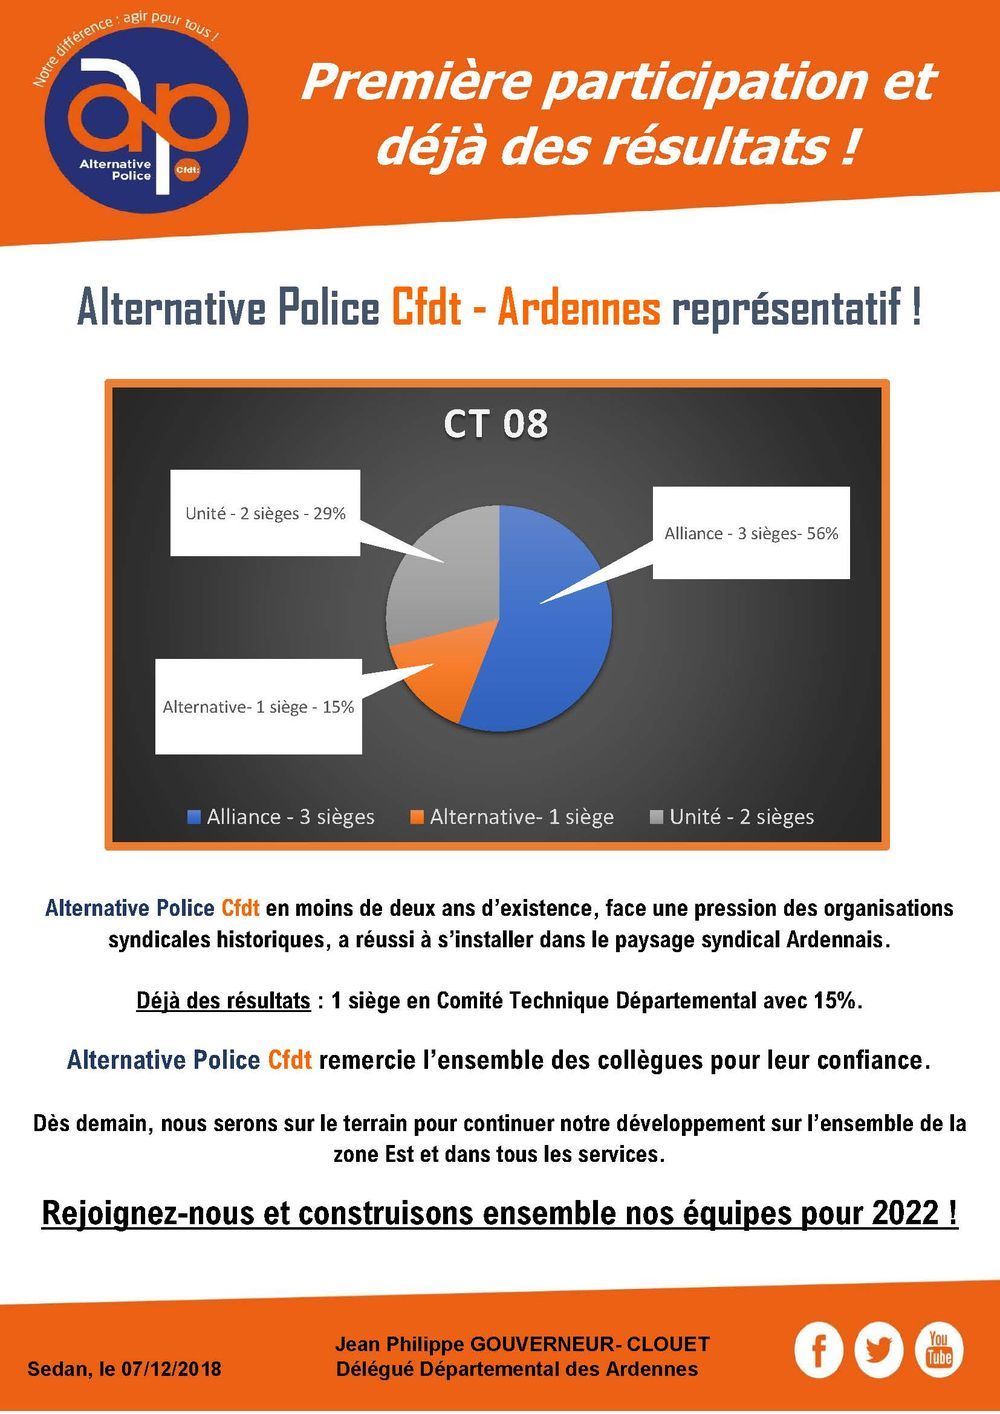 Alternative Police -CFDT Ardennes représentatif !